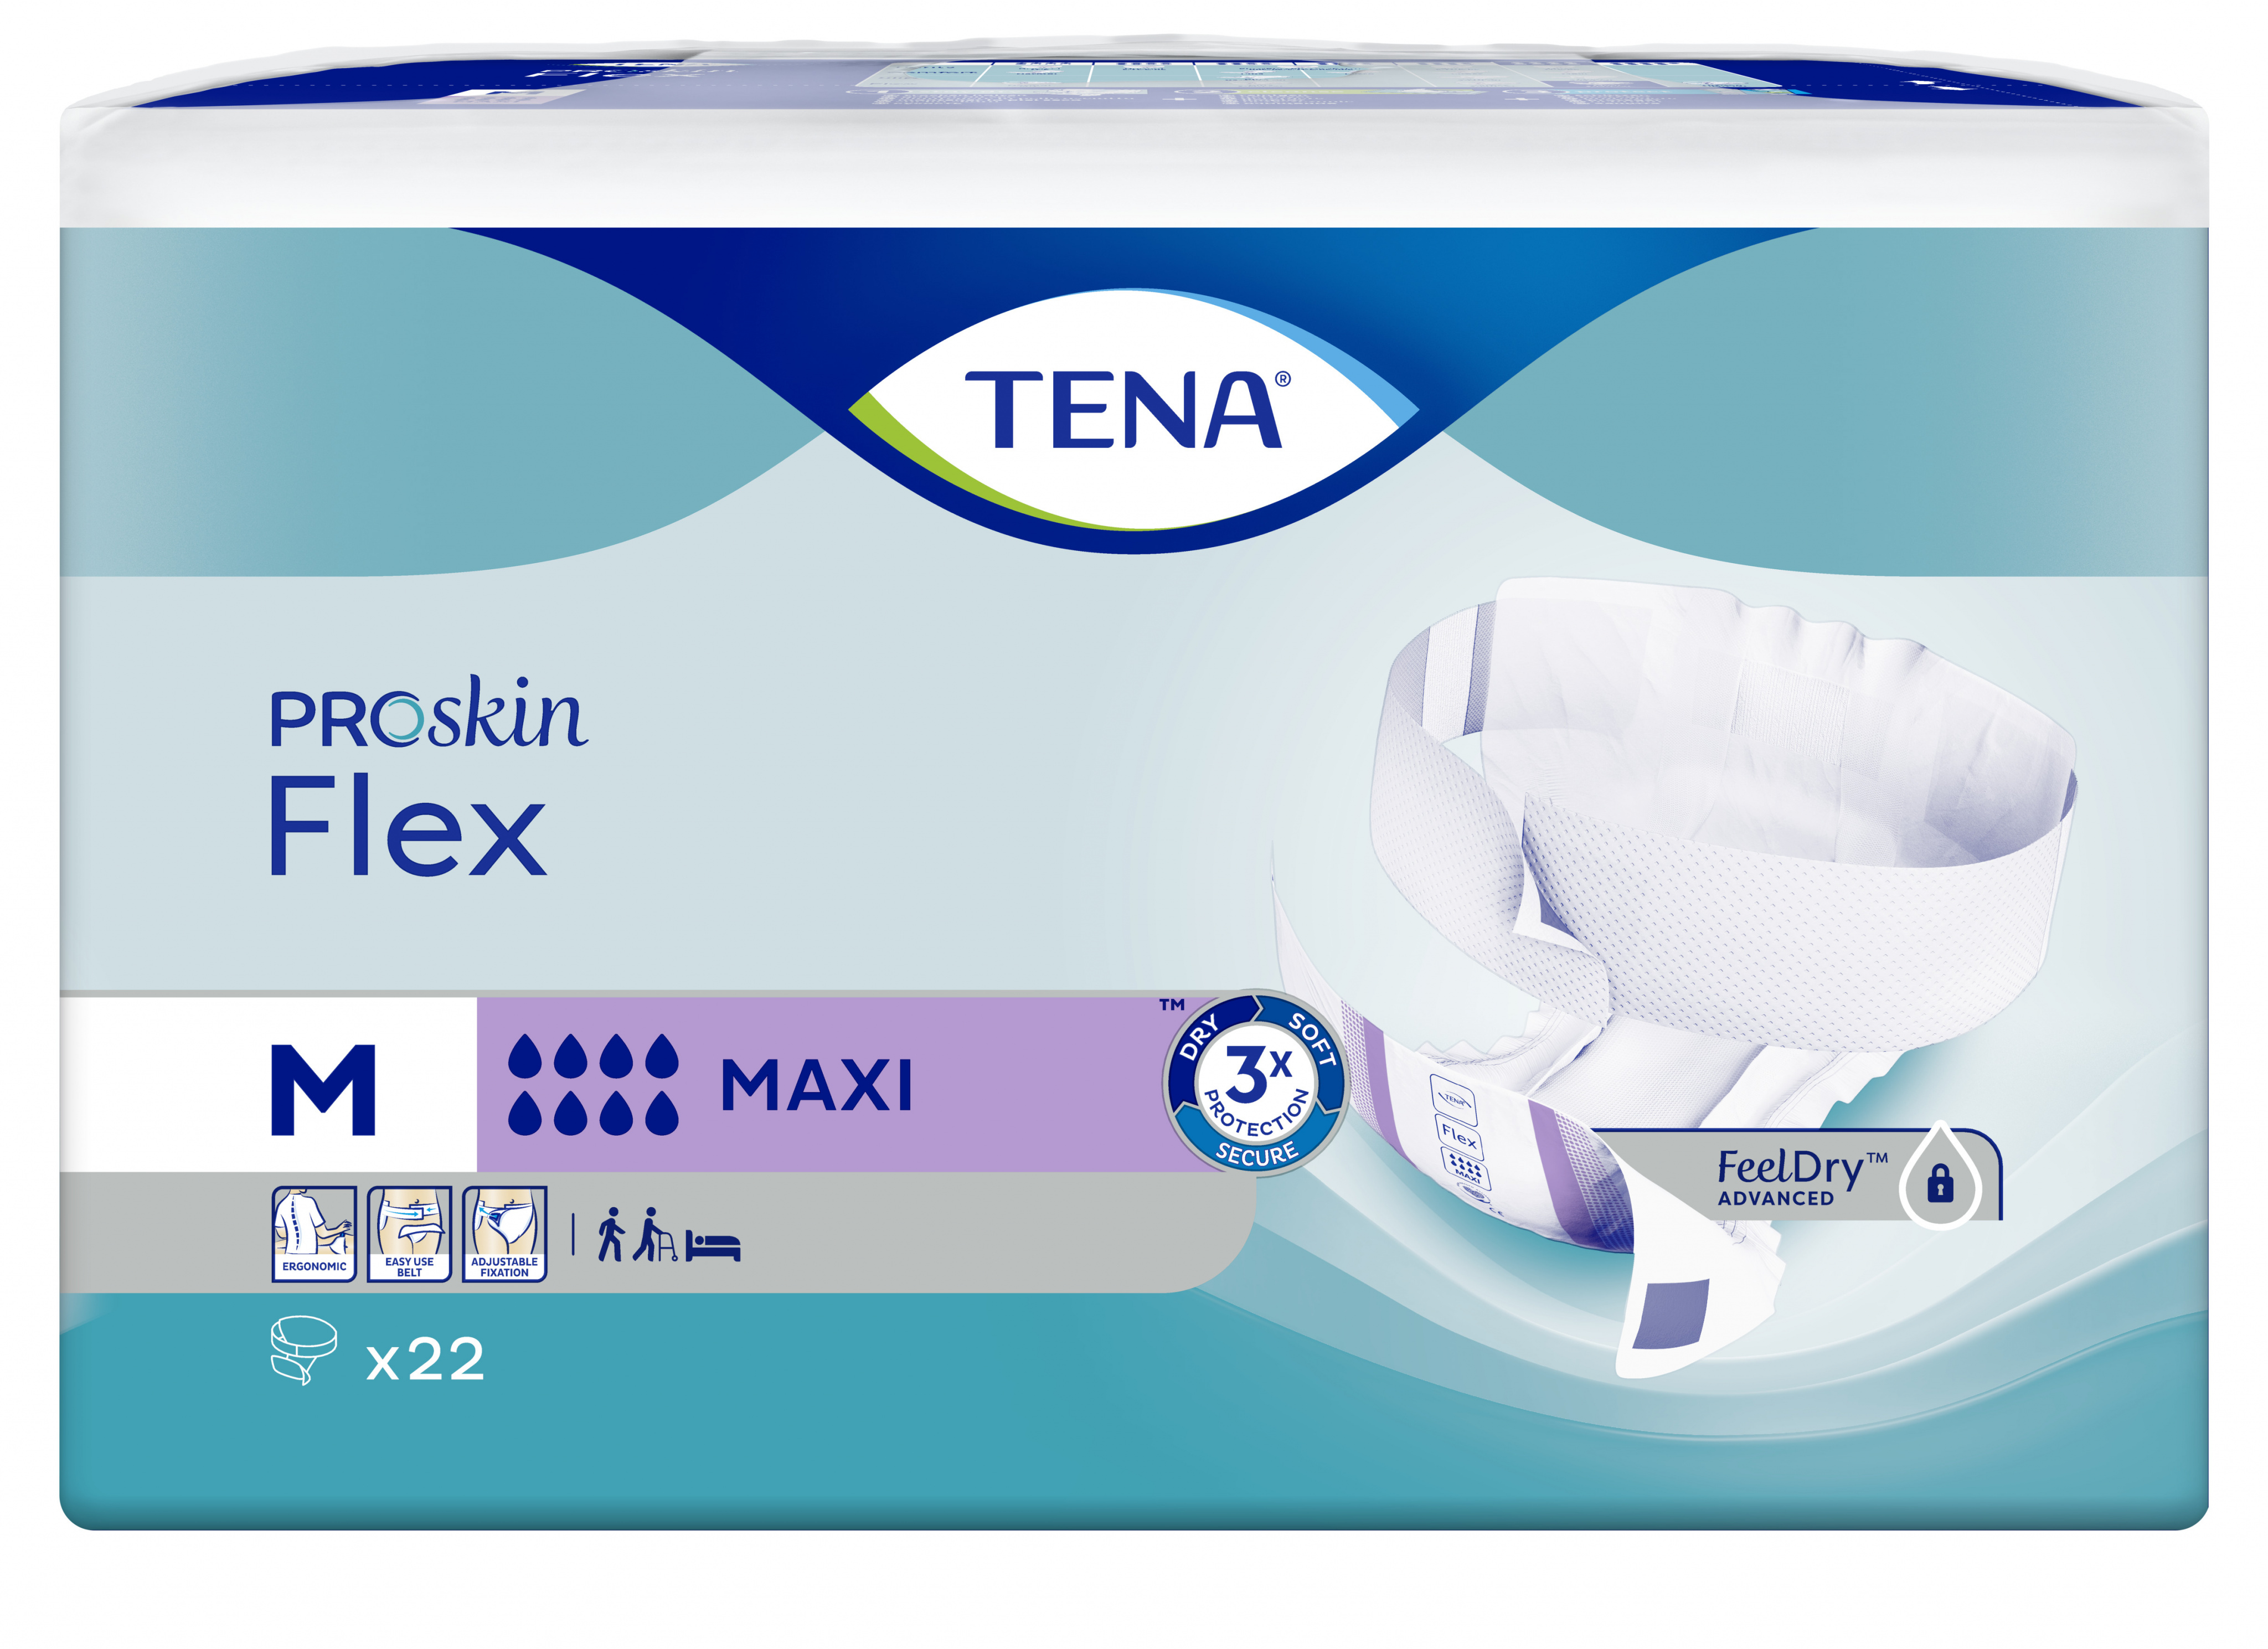 TENA PROskin Flex Maxi Medium 22s image 0